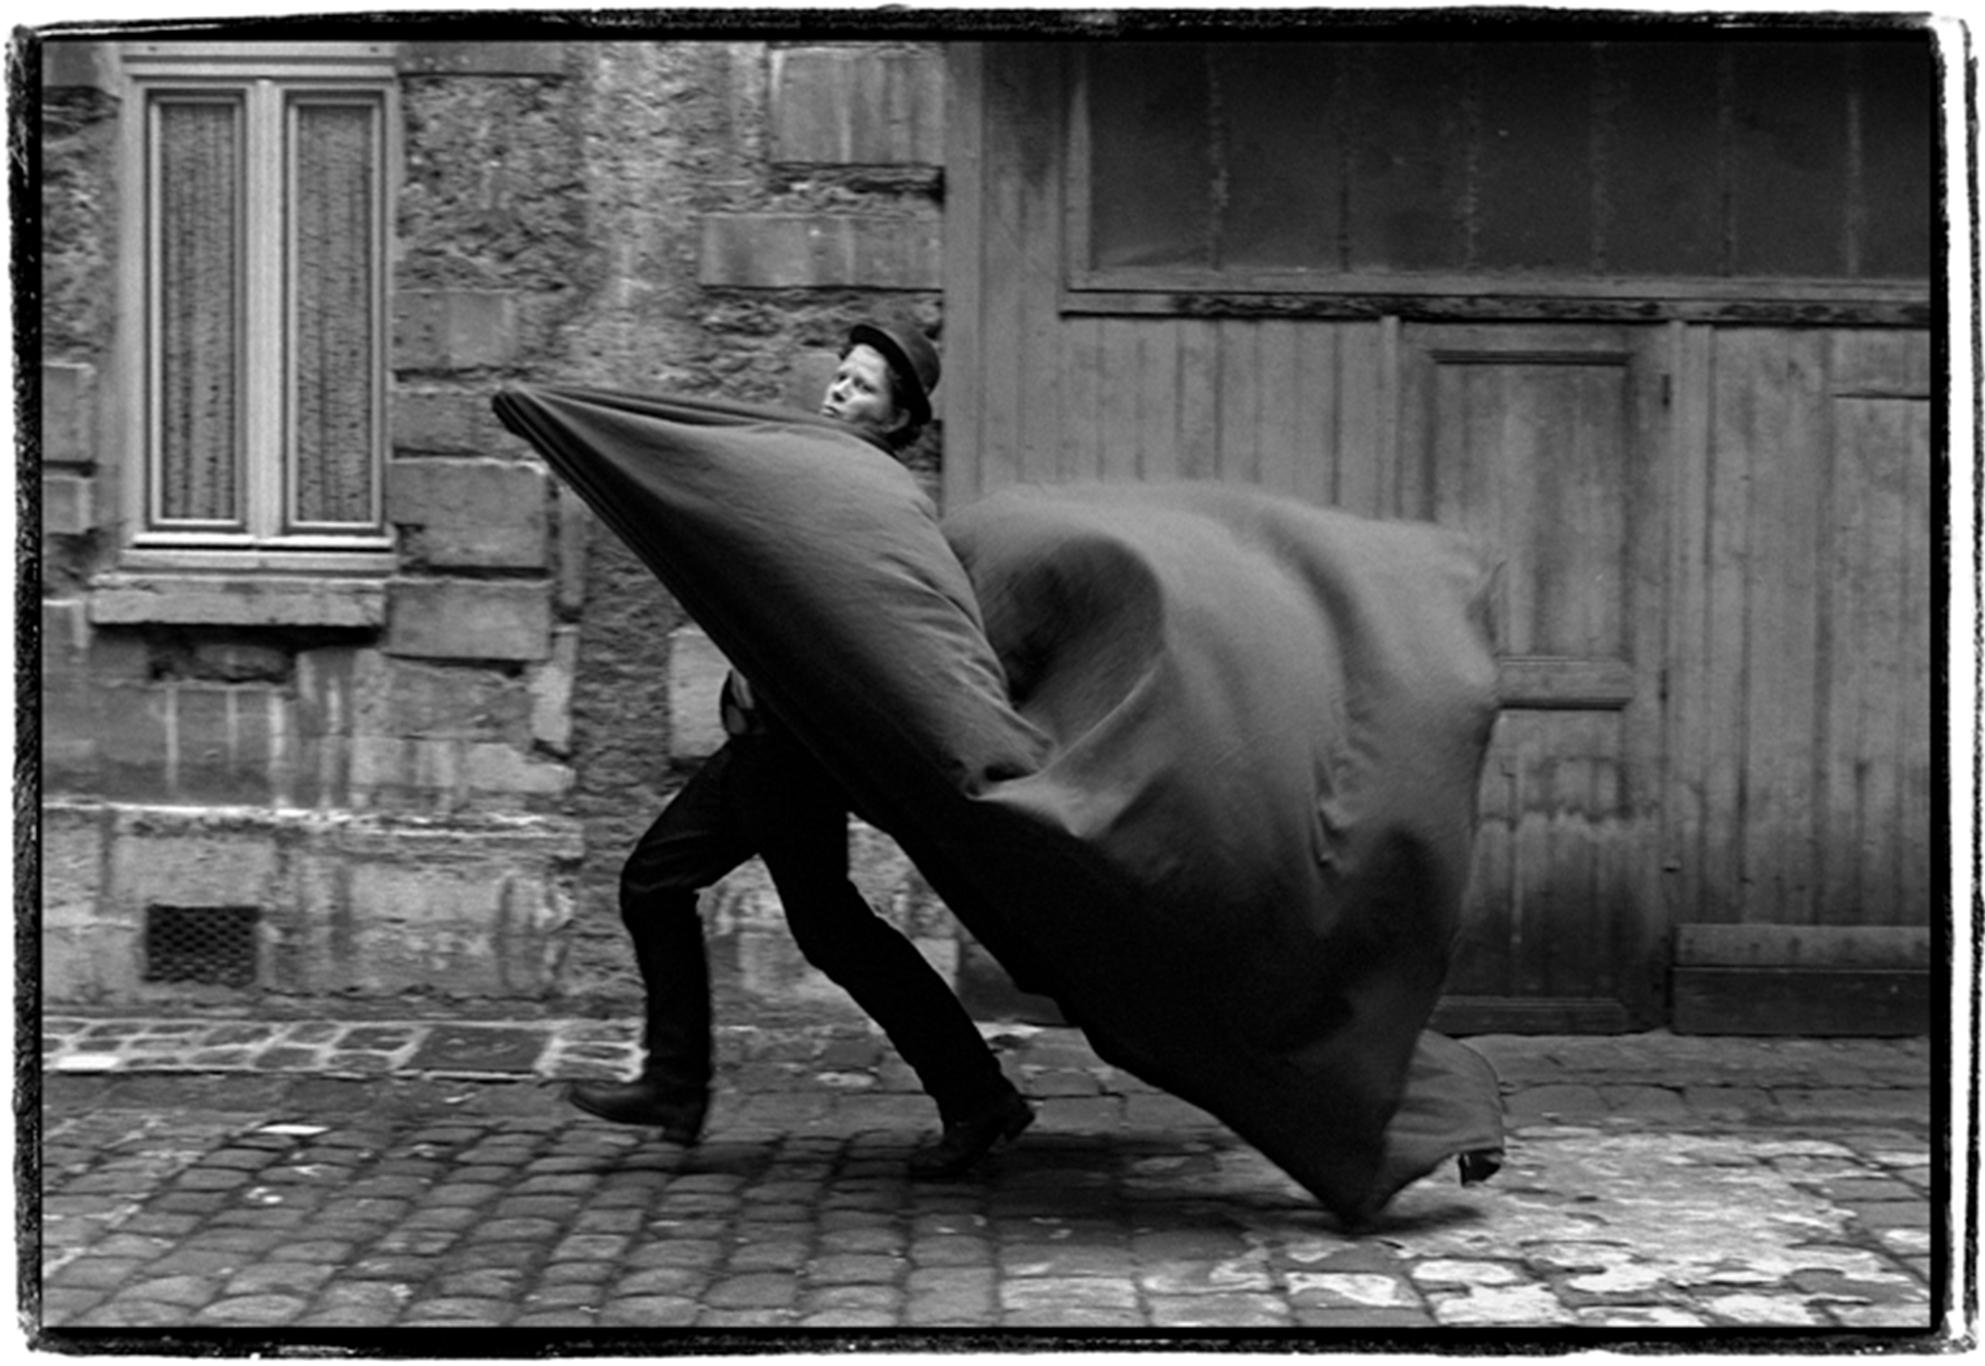 Guido Harari Black and White Photograph – Tom Waits, Mantello, 1992